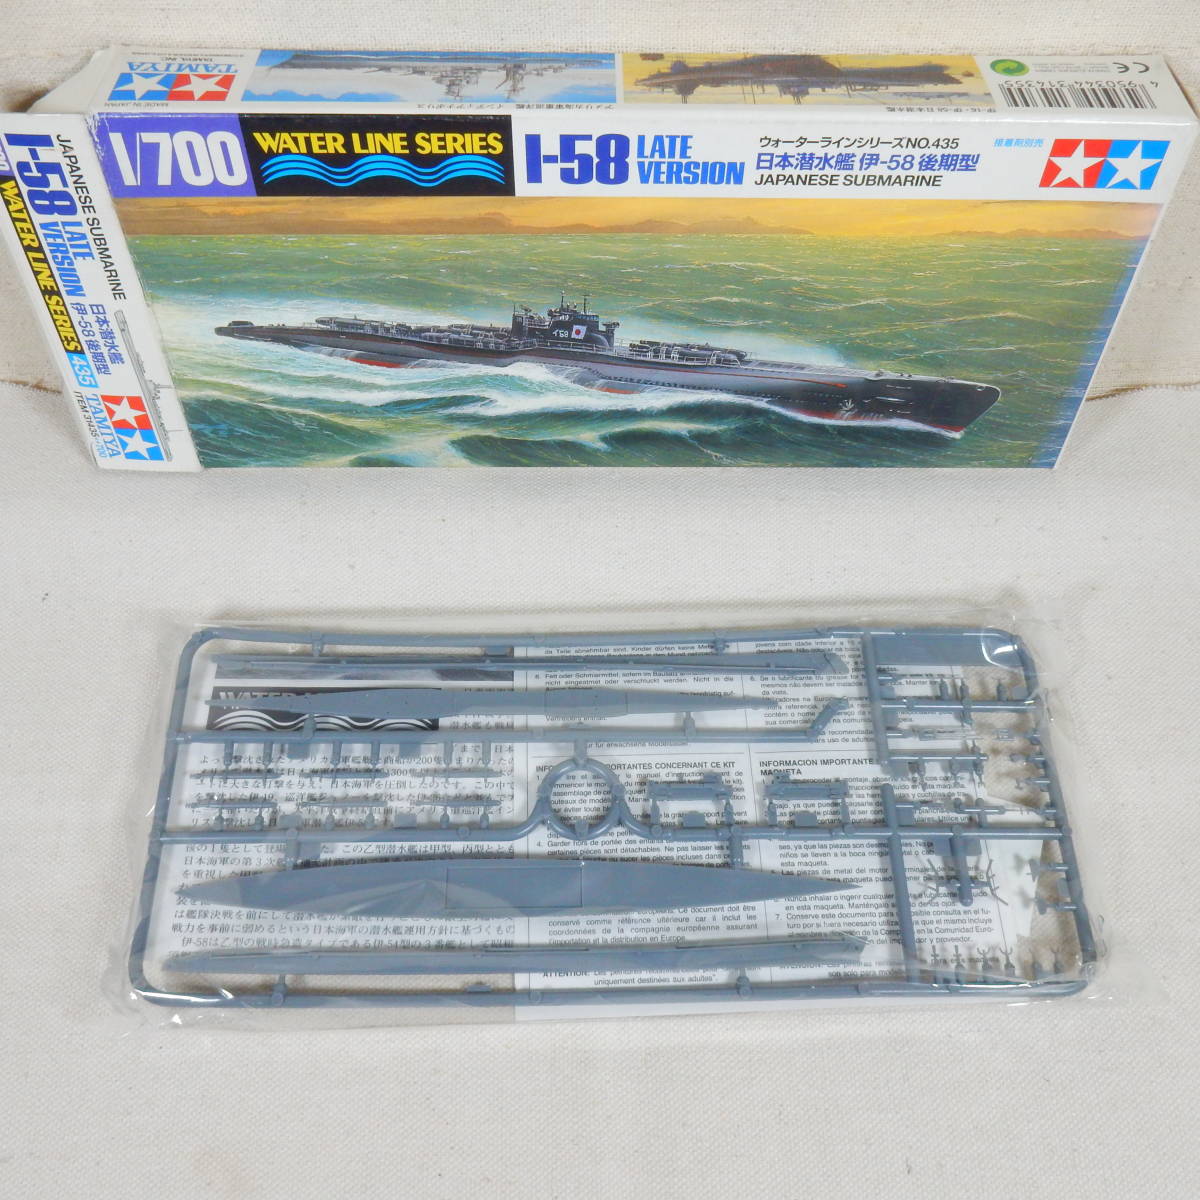 (17B148) 日本潜水艦 I-58(伊-58) 後期型 タミヤ 1/700 ウォーターラインシリーズ NO.435 内袋未開封 未組立て_画像3